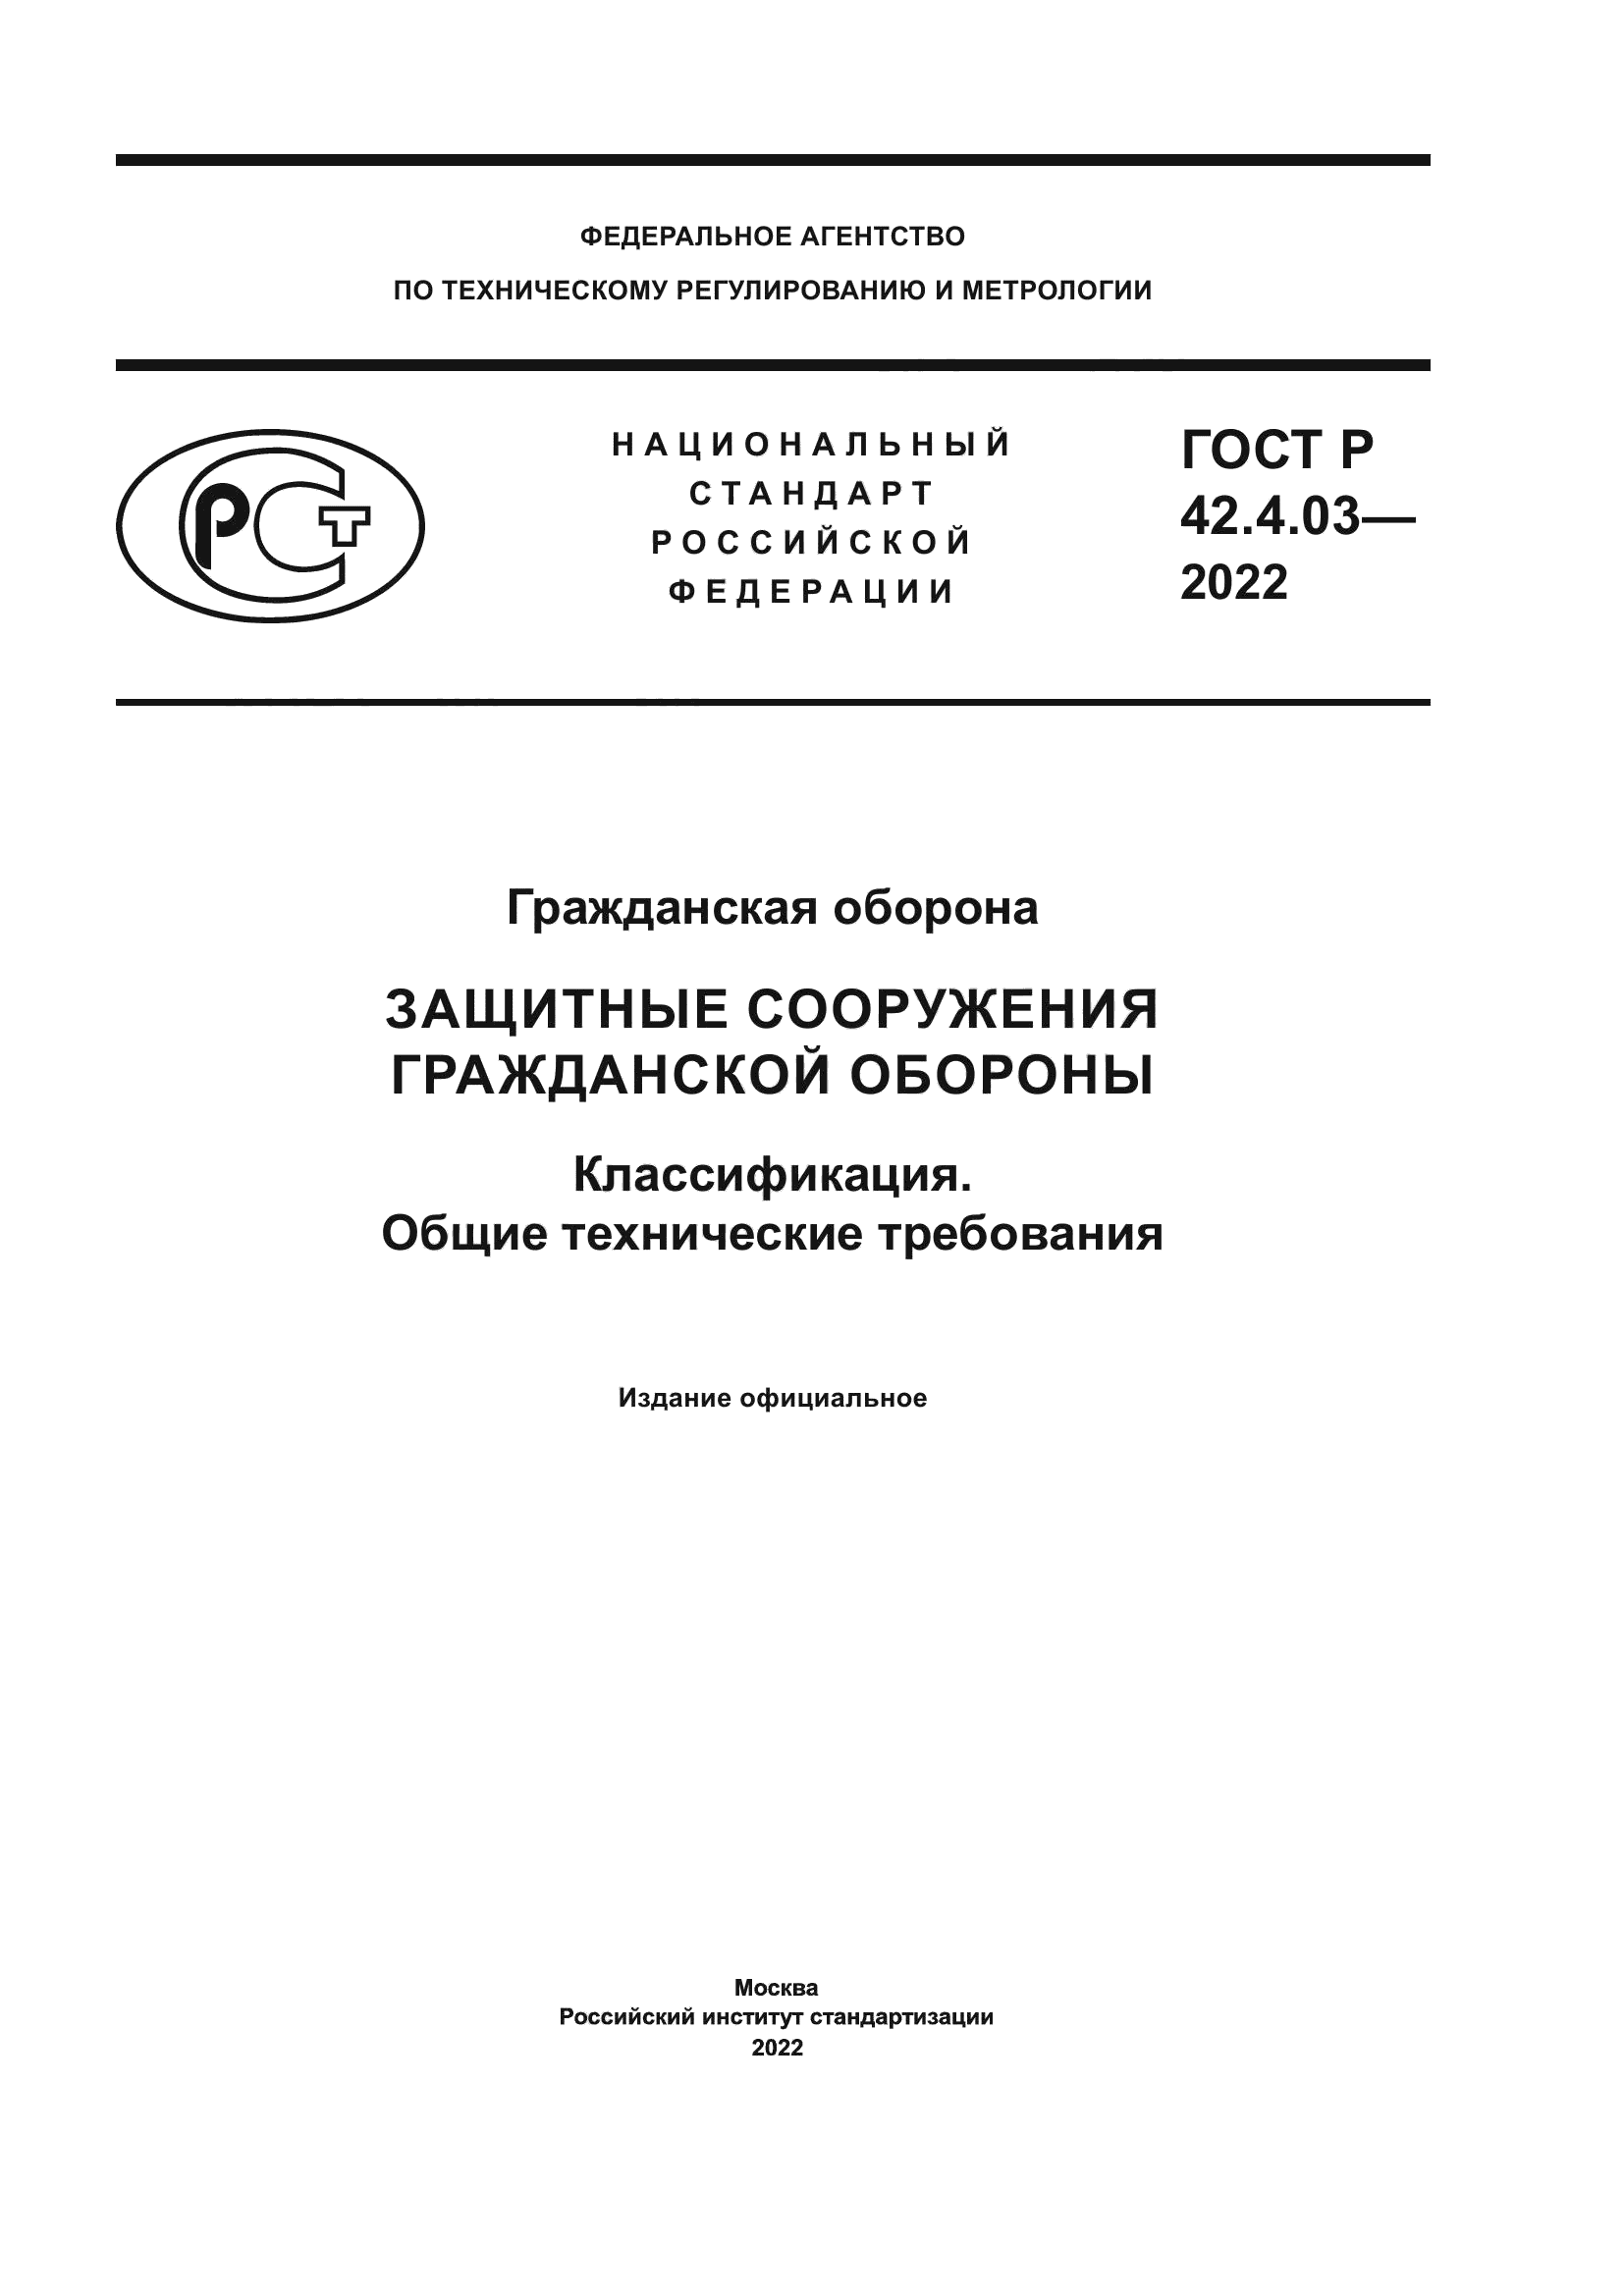 ГОСТ Р 42.4.03-2022